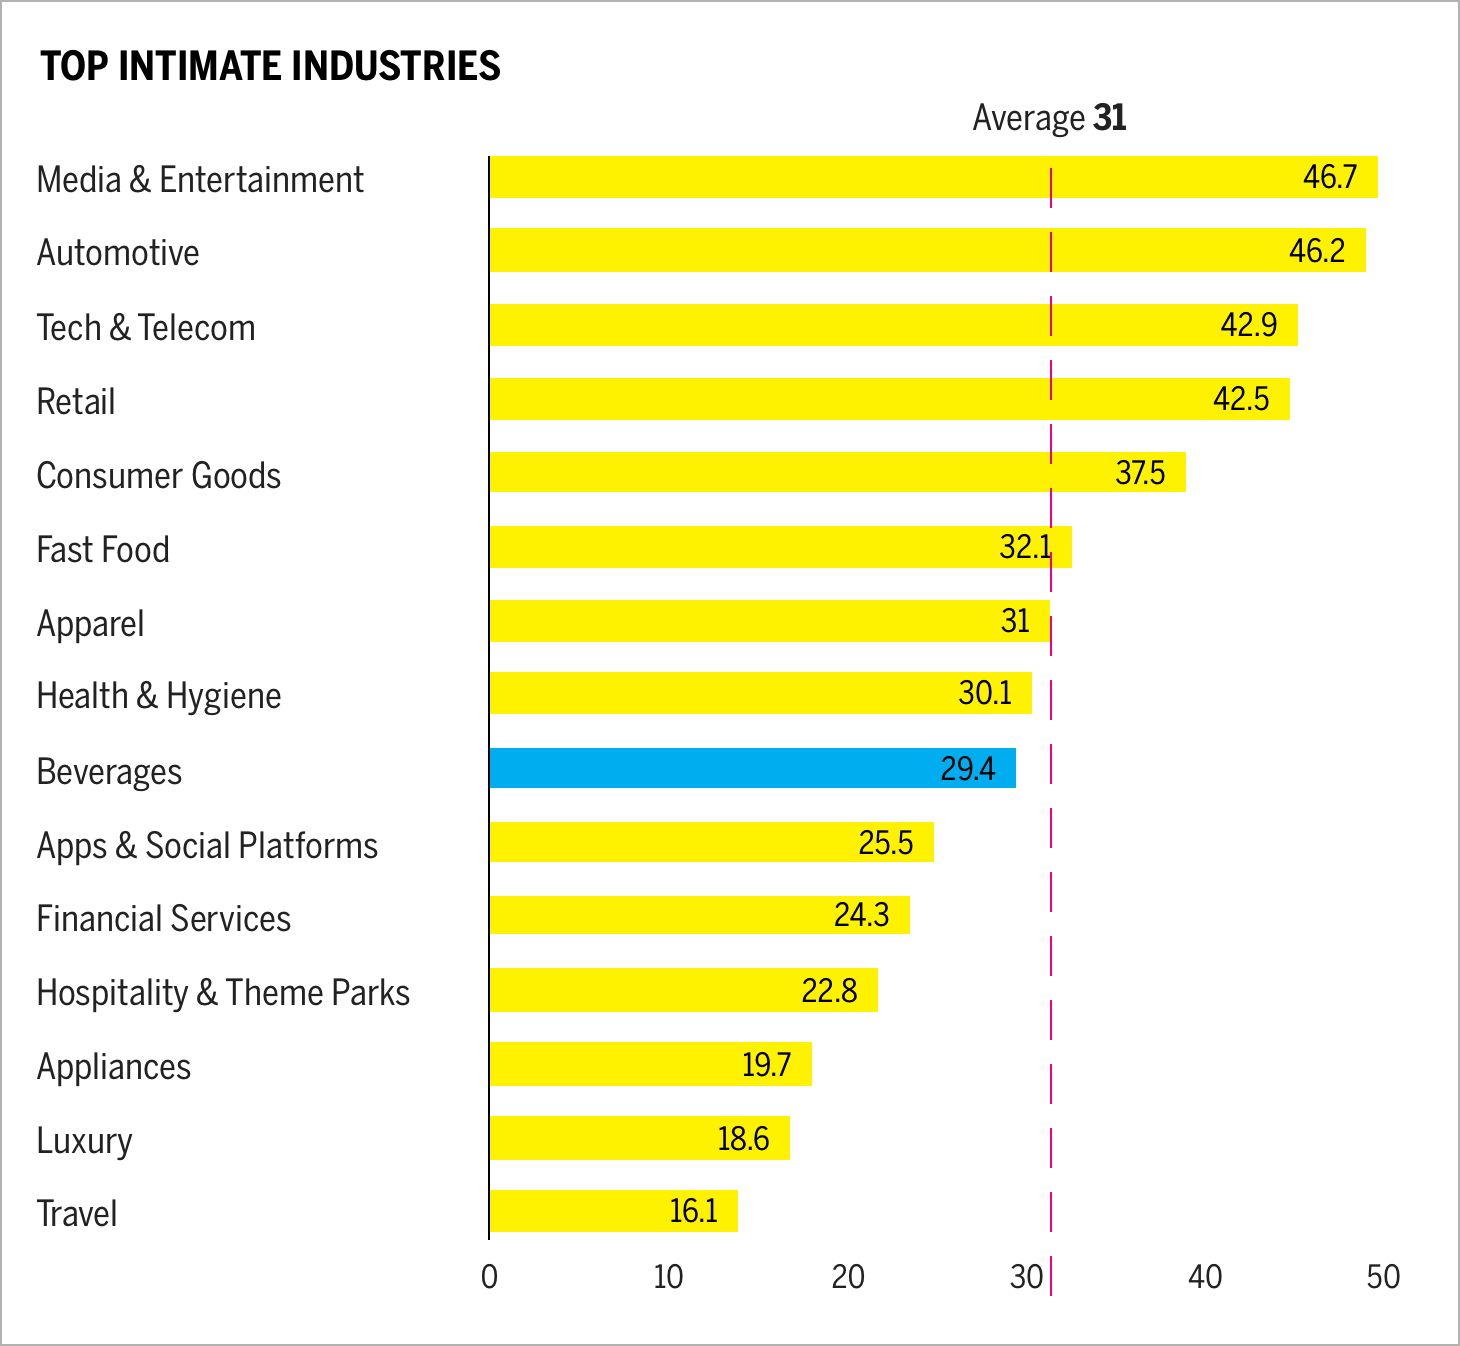 Top intimate industries